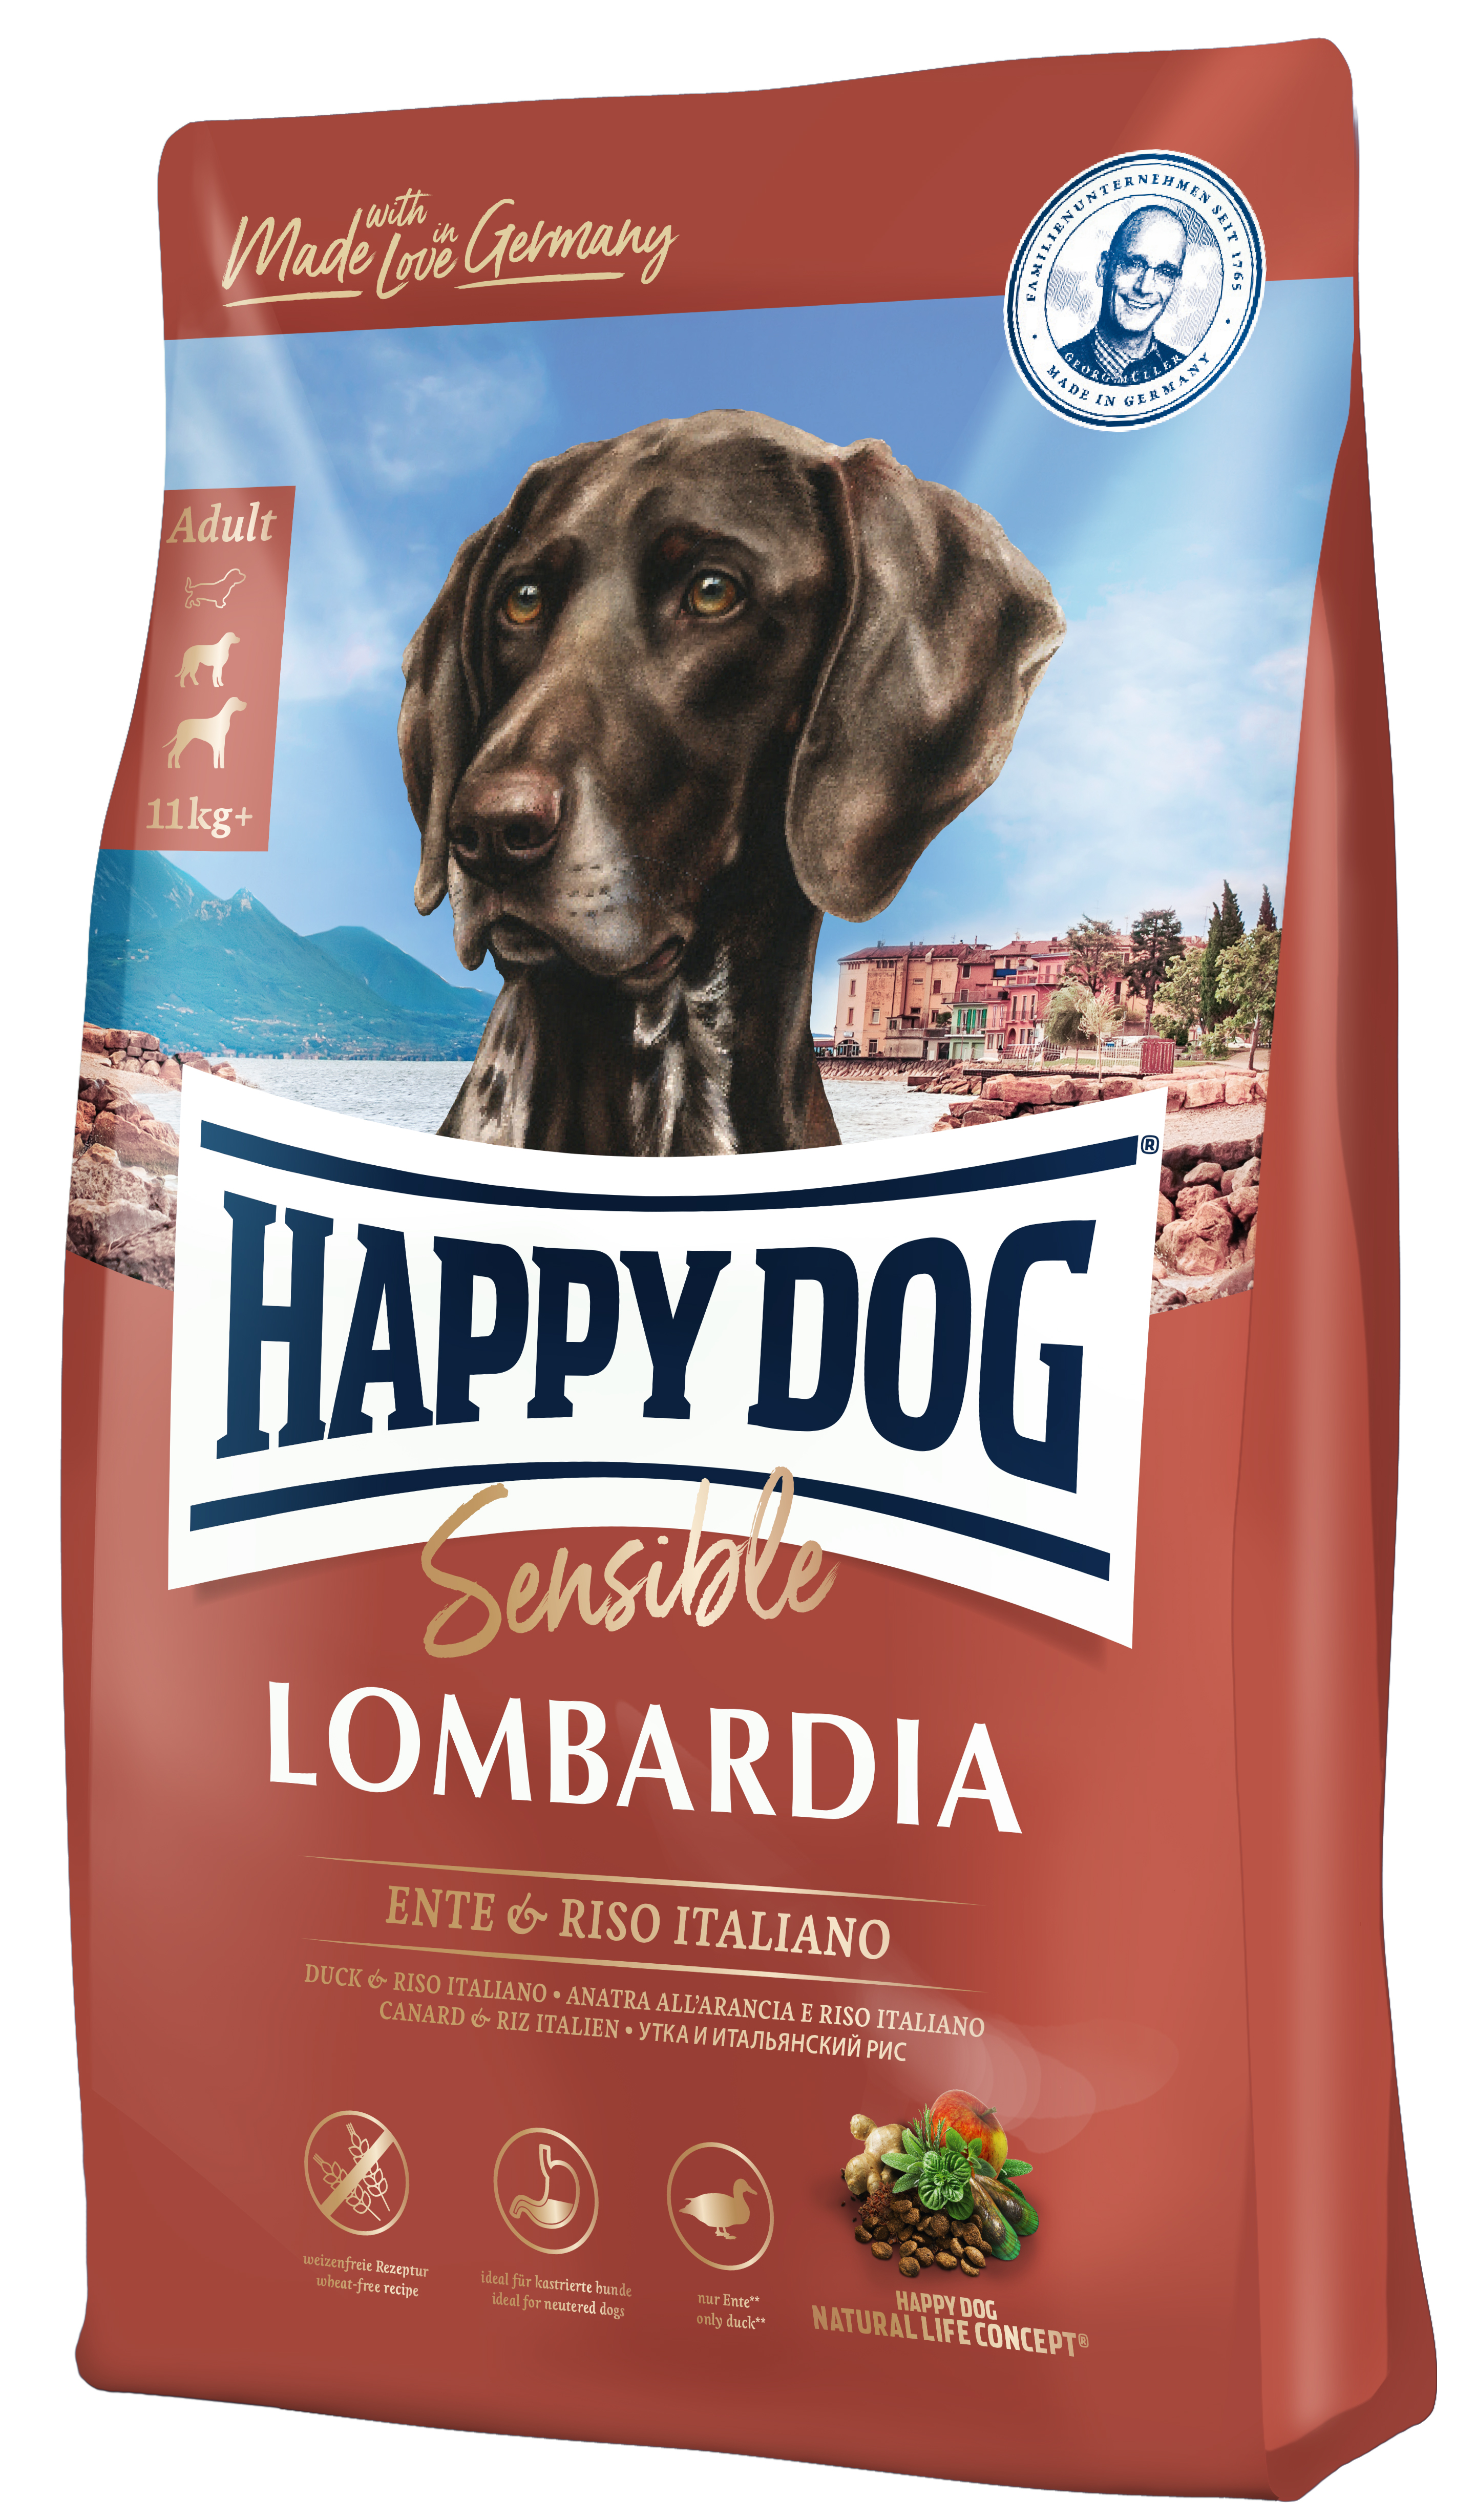 Happy Dog Sensible Lombardia 1 kg